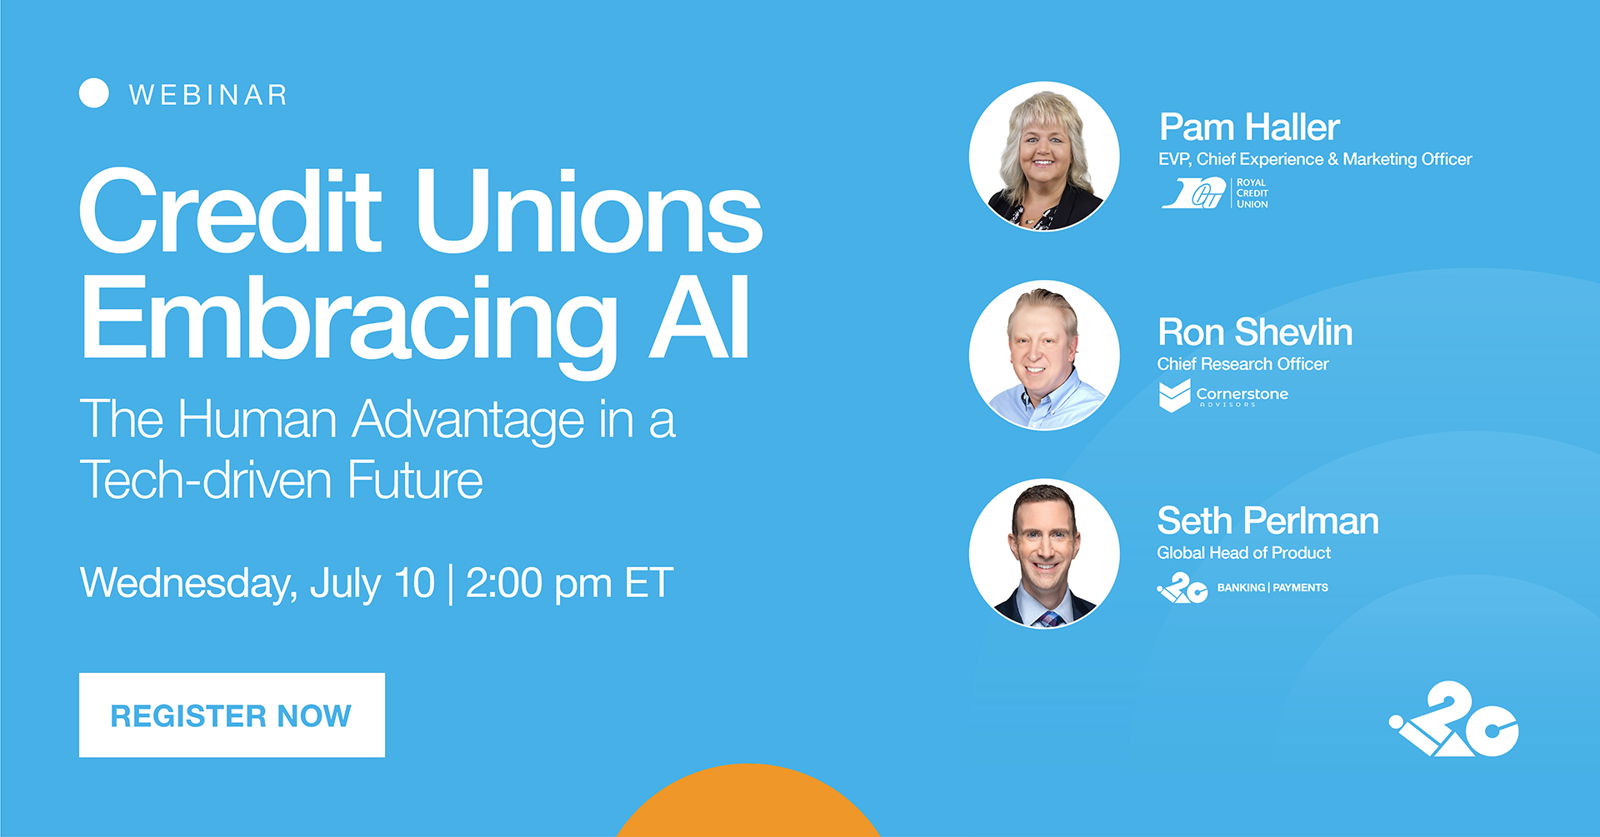 Credit Unions Embracing AI: The Human Advantage in a Tech-driven Future